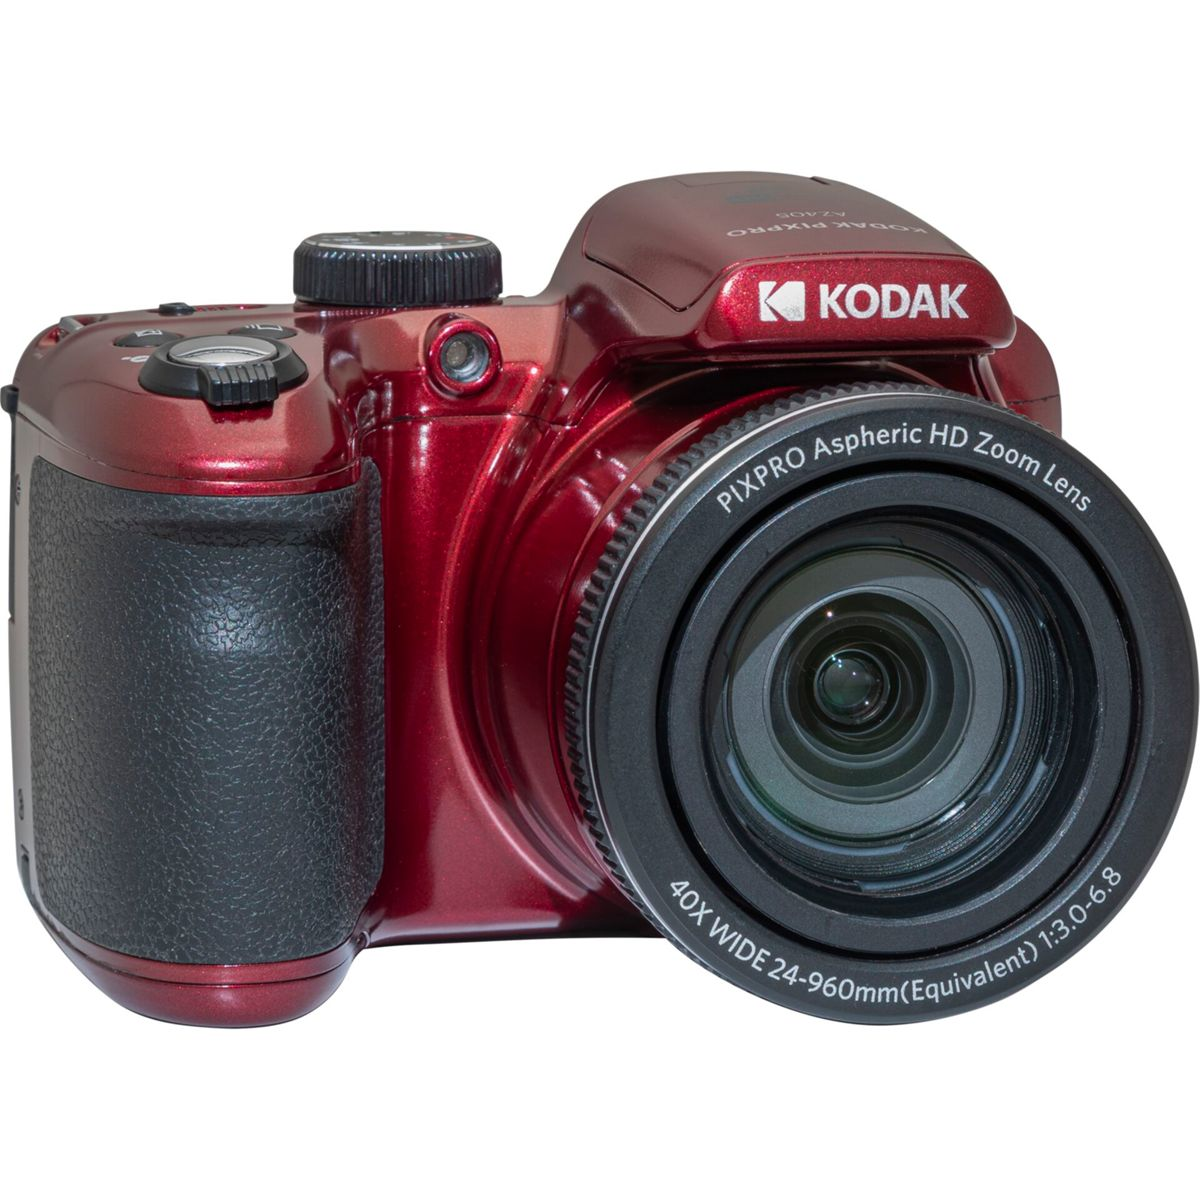 PixPro KODAK Digitalkamera rot rot AZ405